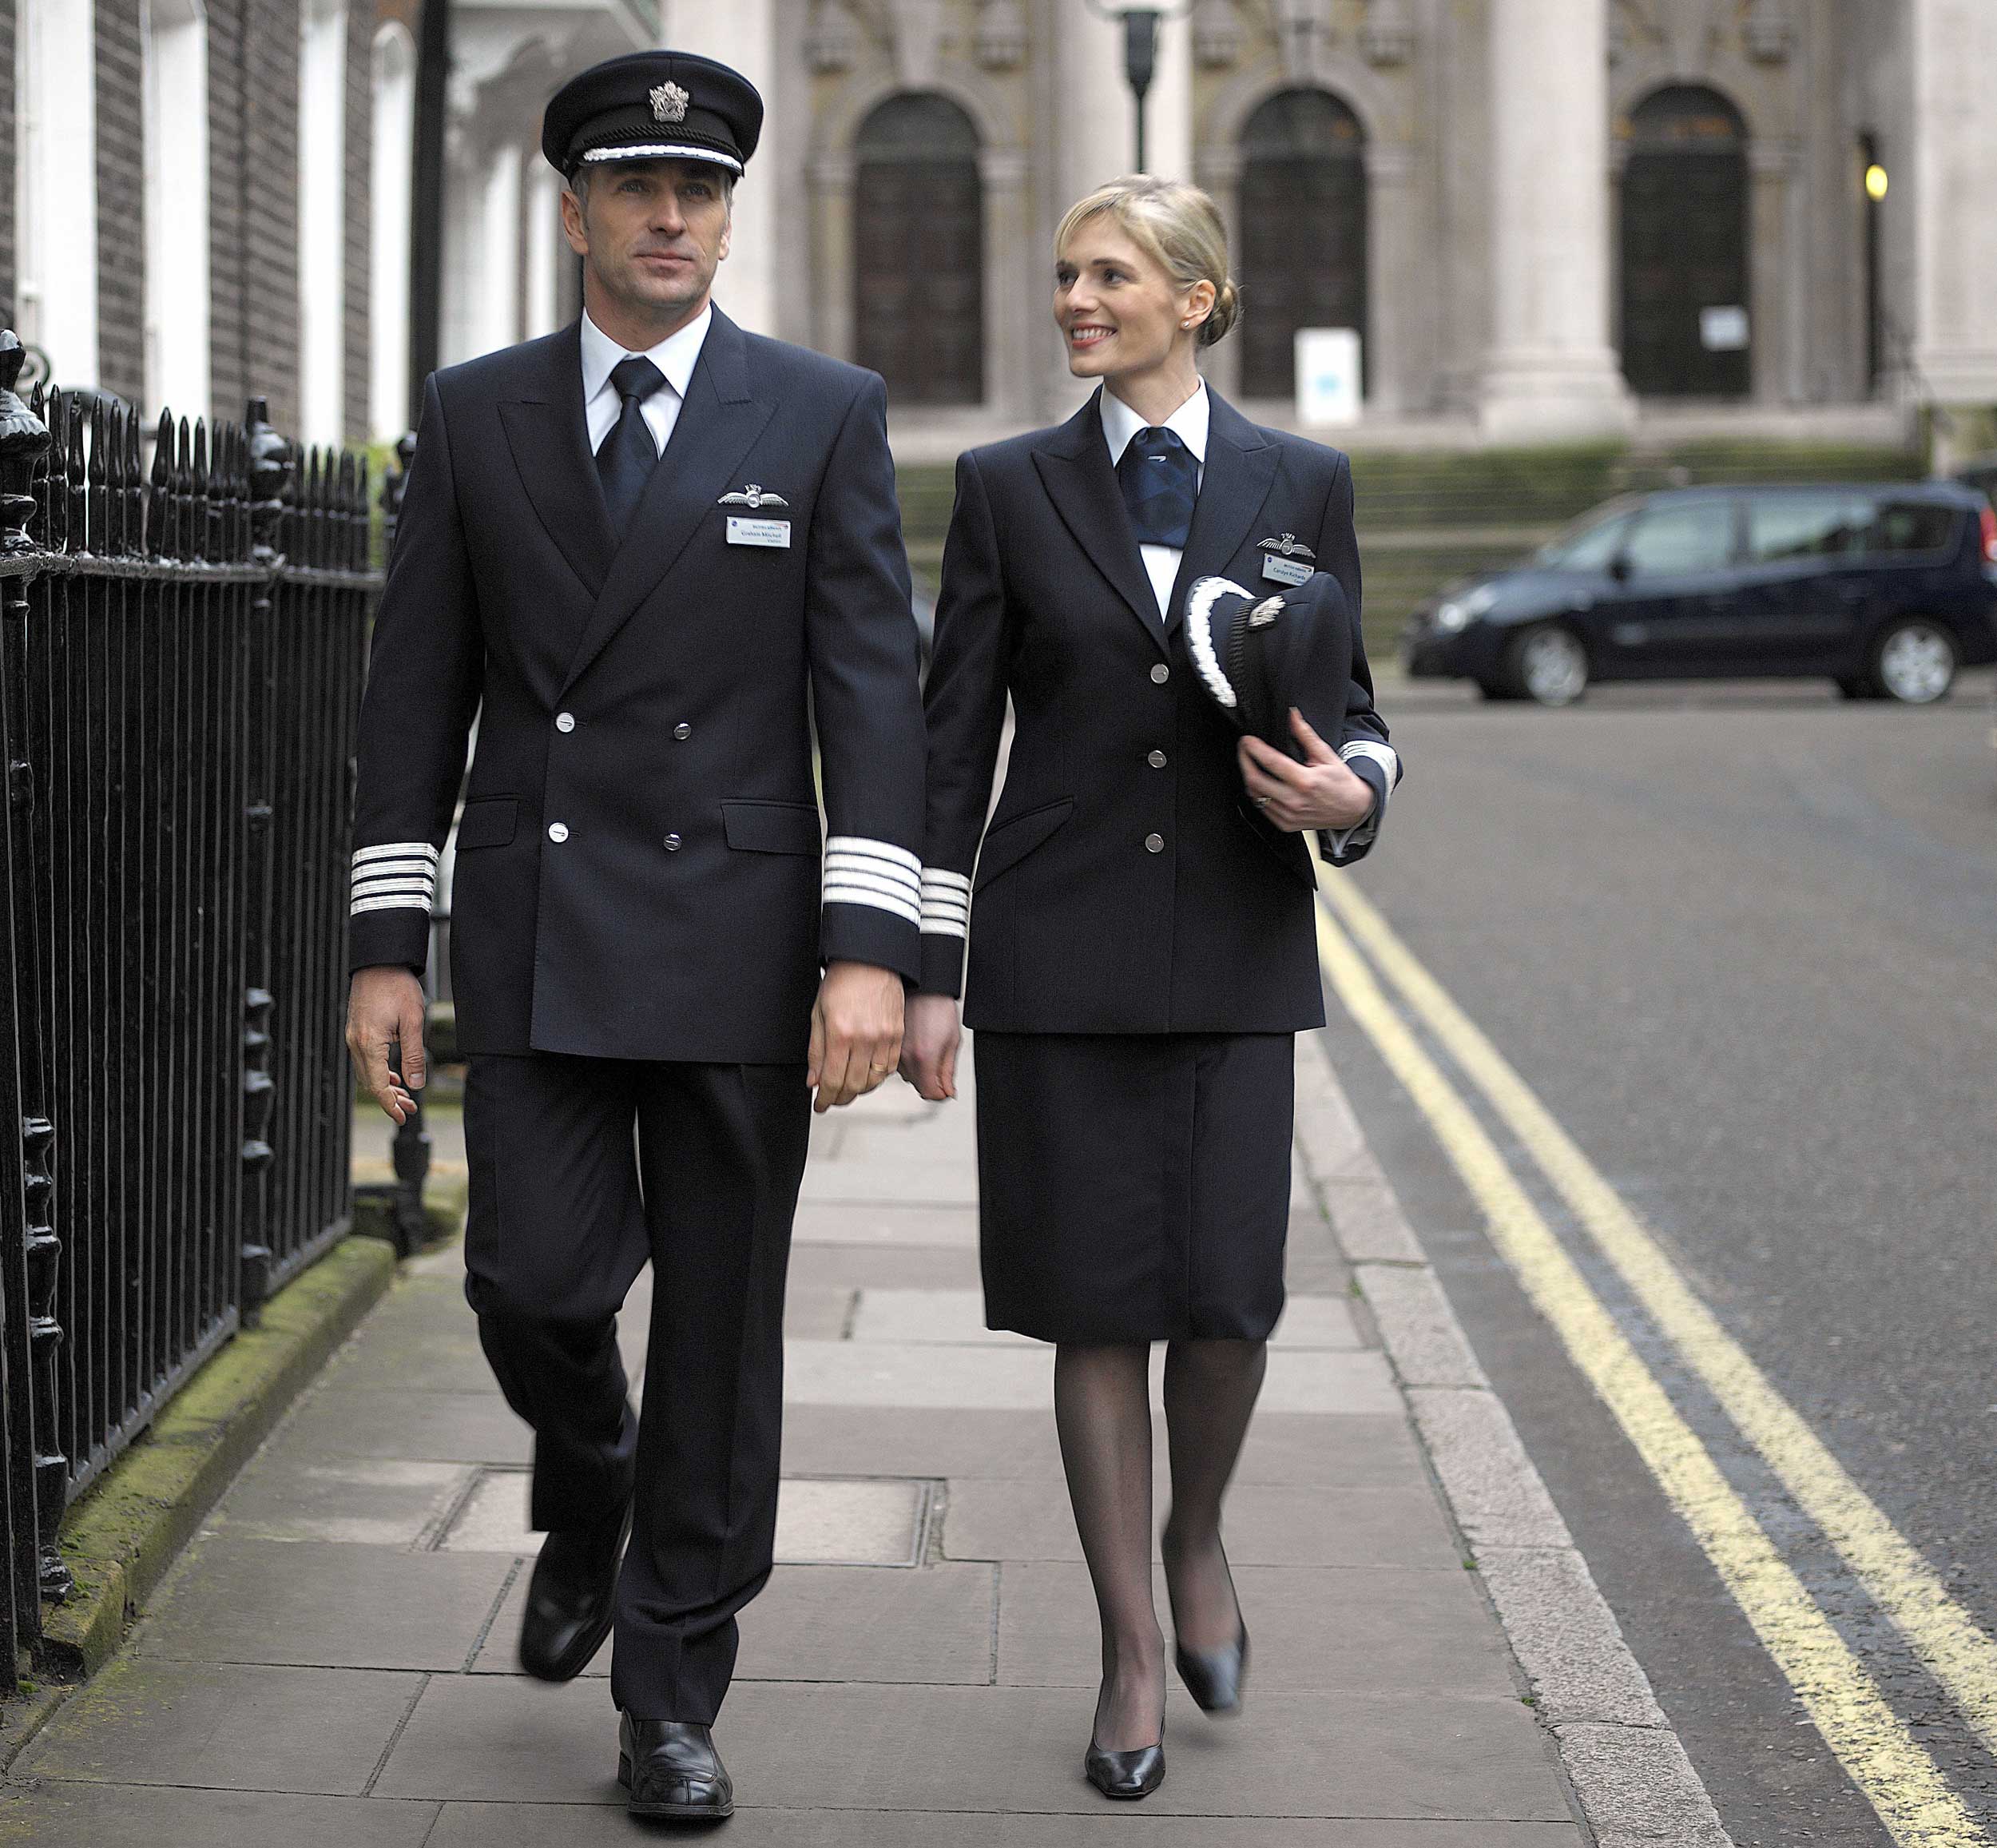 British Airways closes gender pay gap